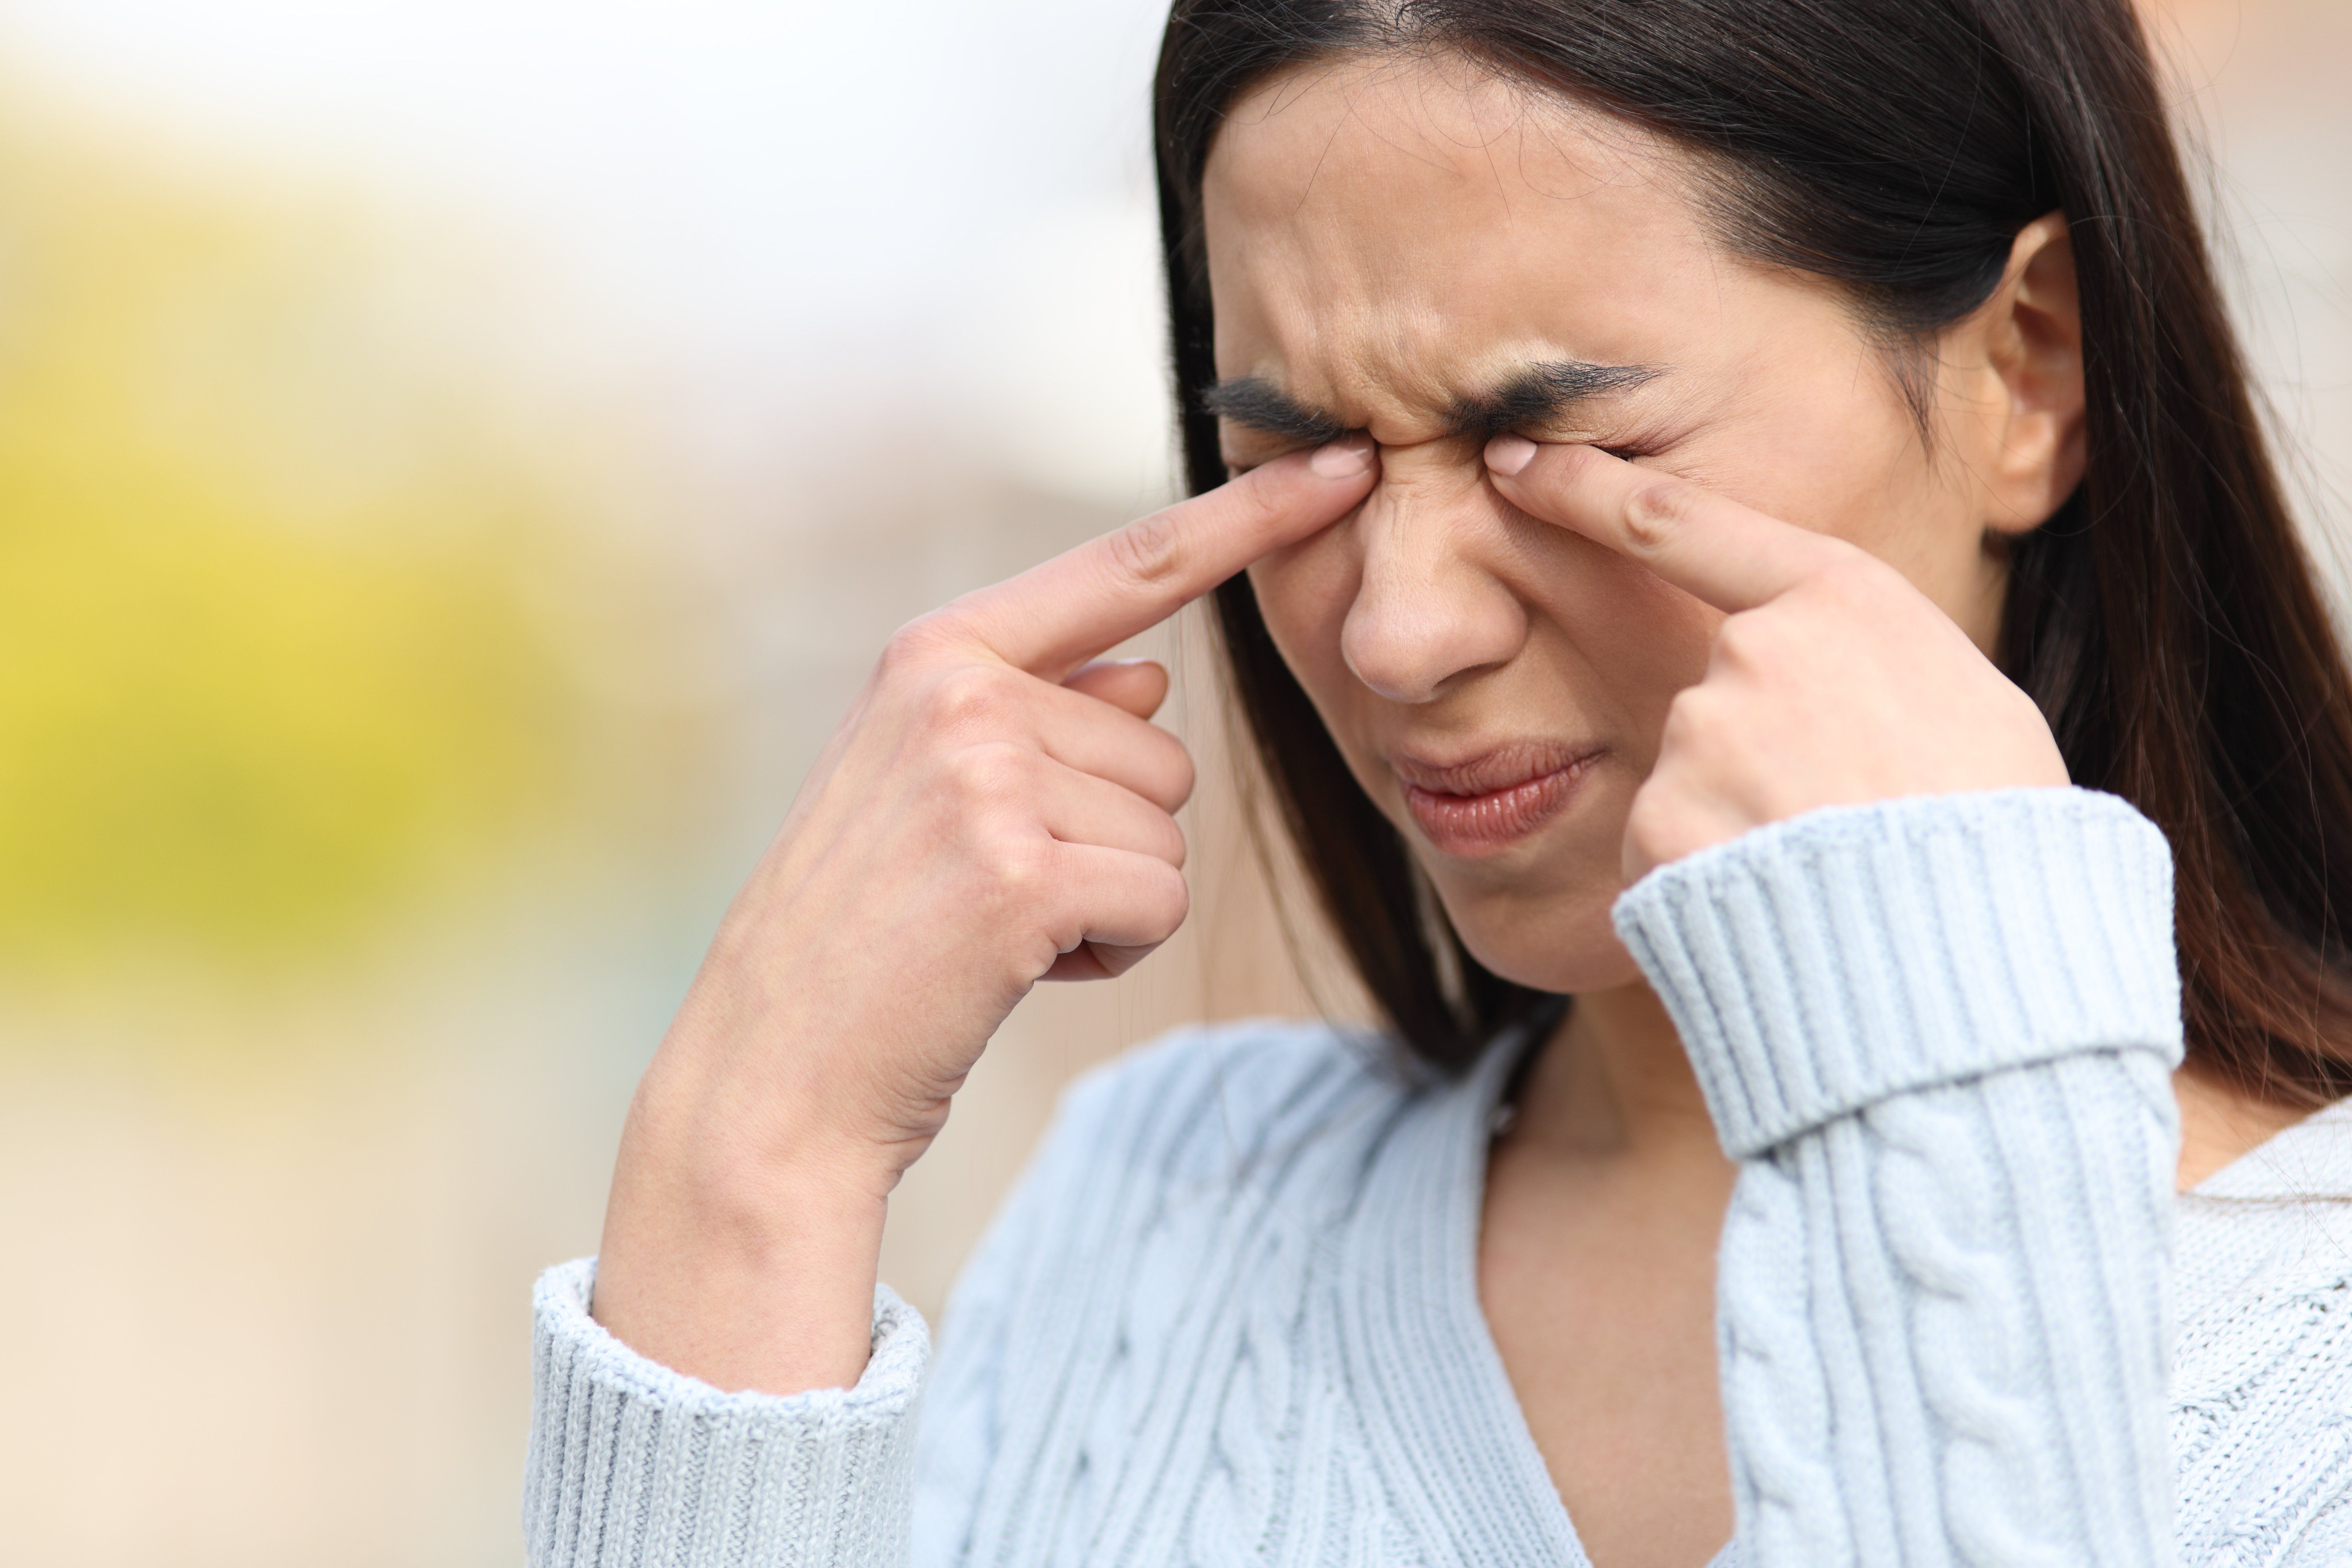 Do I Have Dry Eye or Seasonal Allergies?